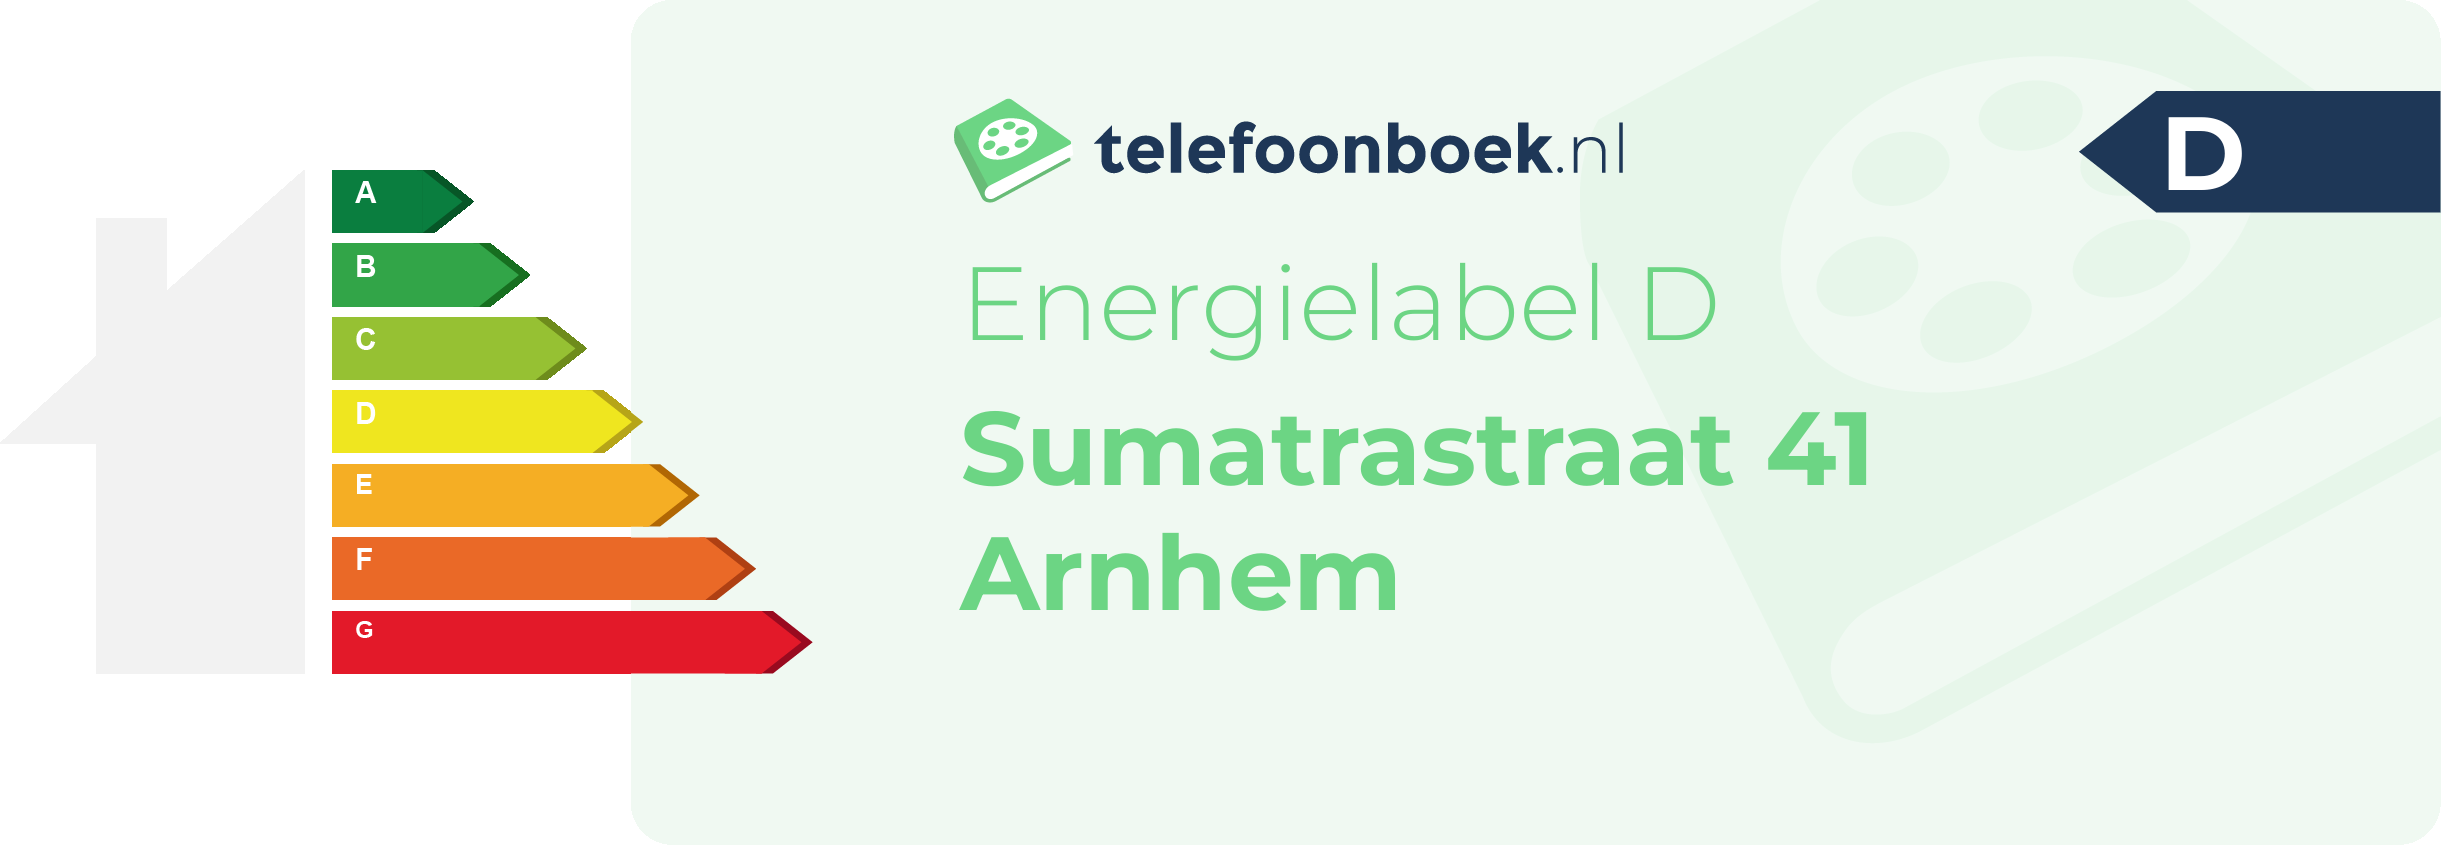 Energielabel Sumatrastraat 41 Arnhem